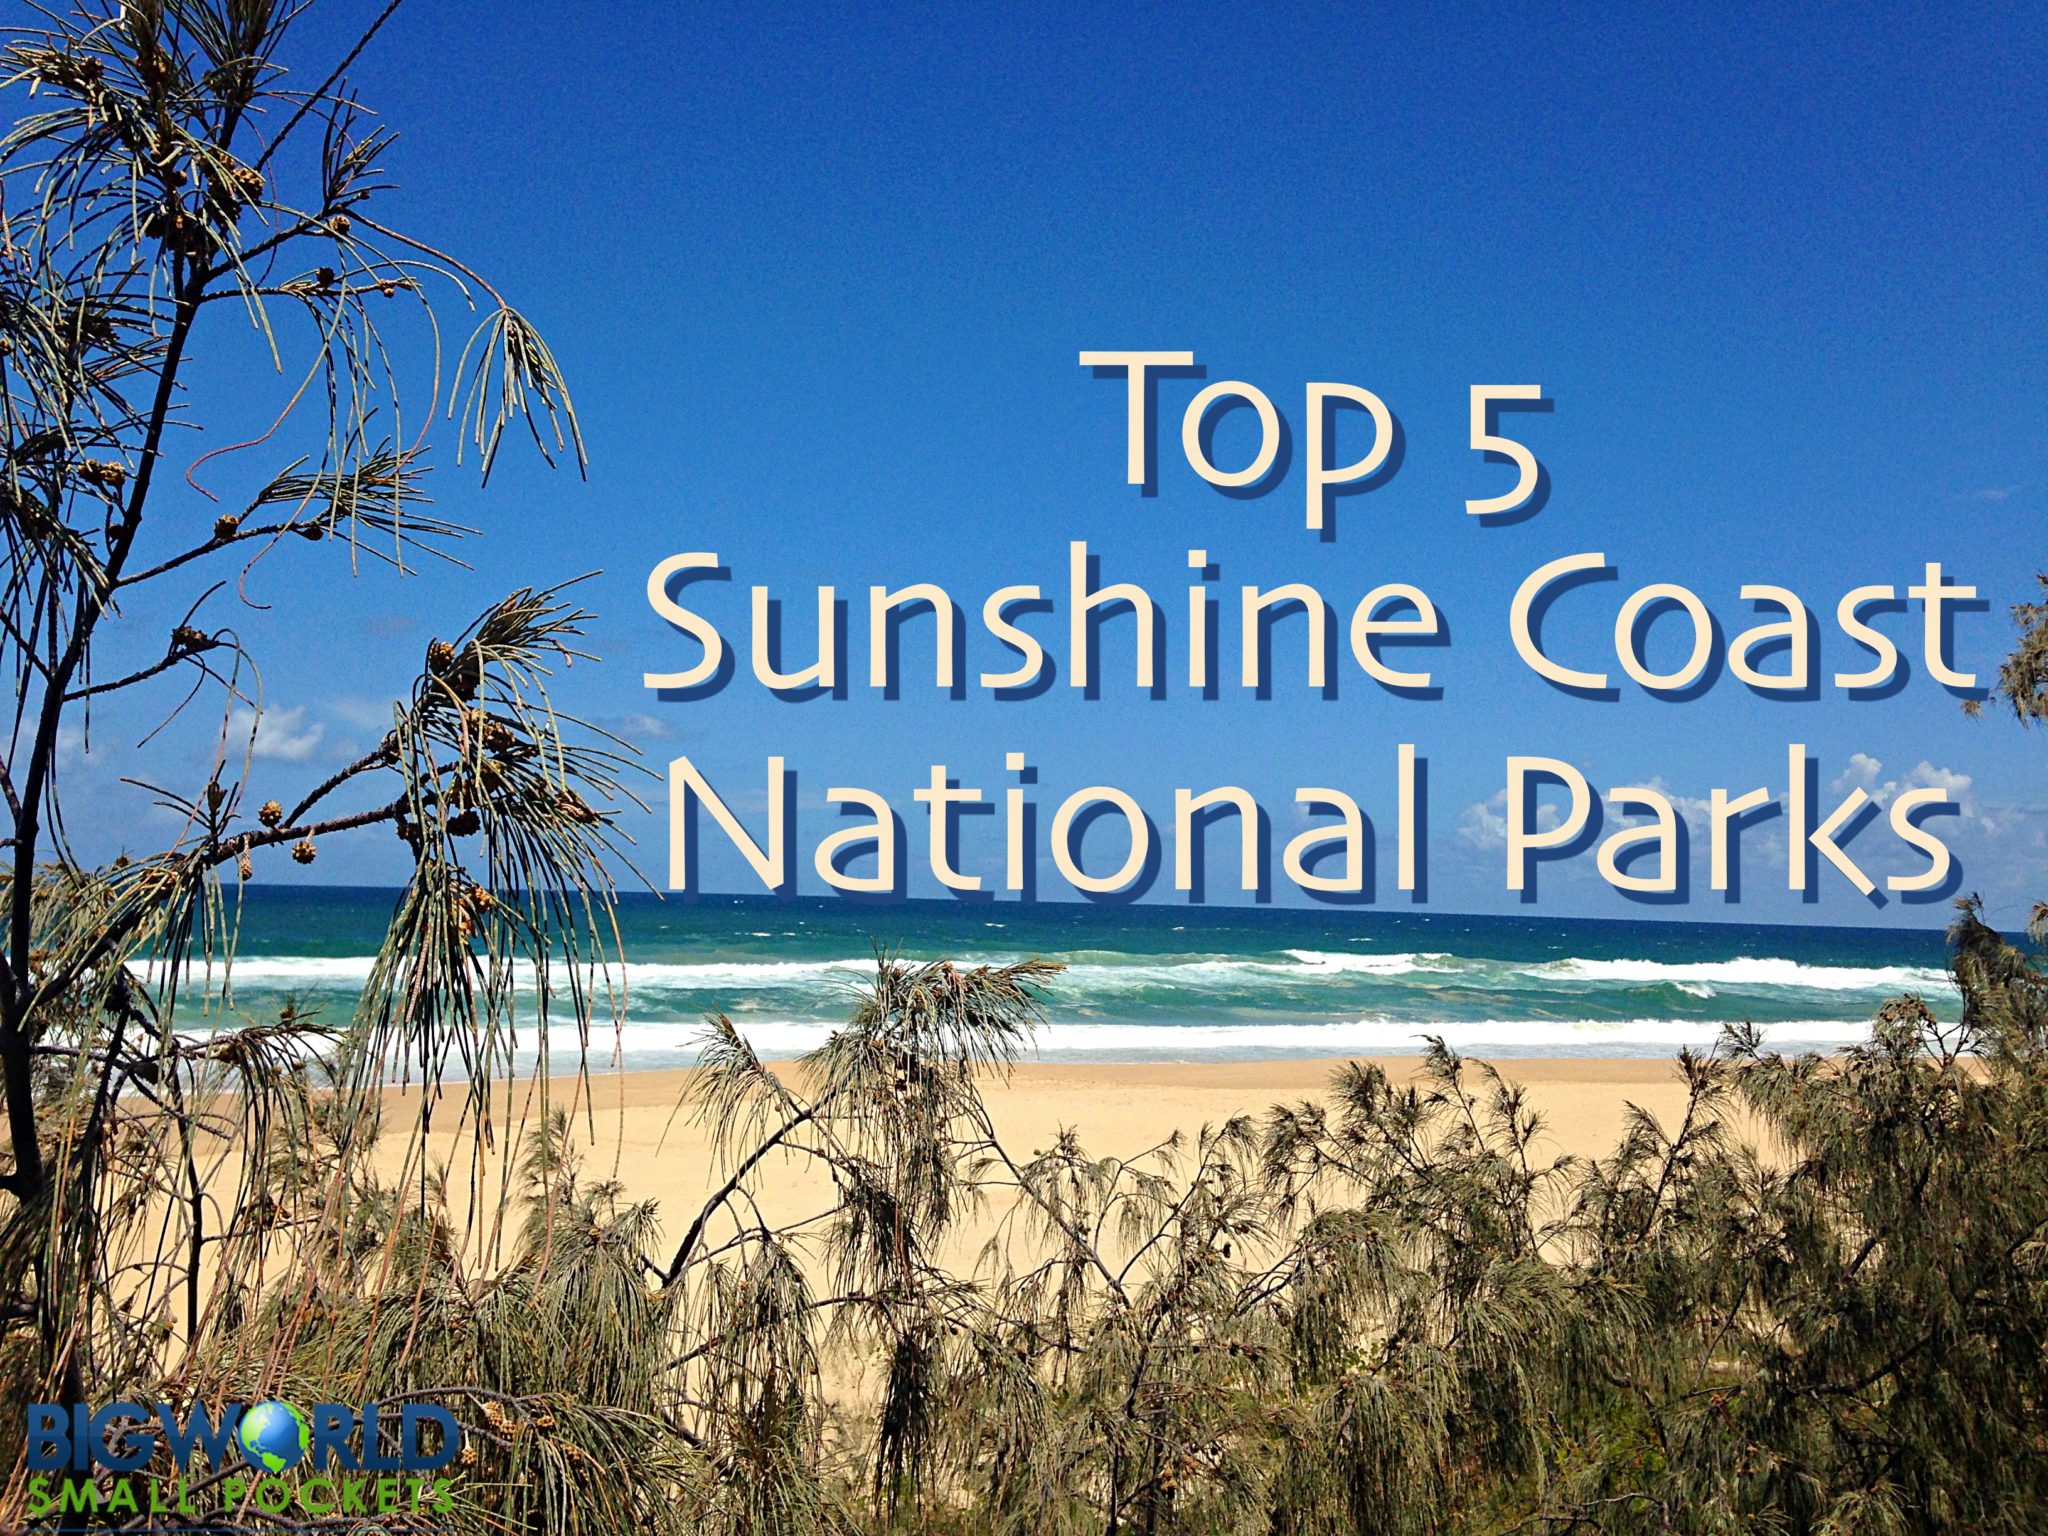 Top 5 Sunshine Coast National Parks